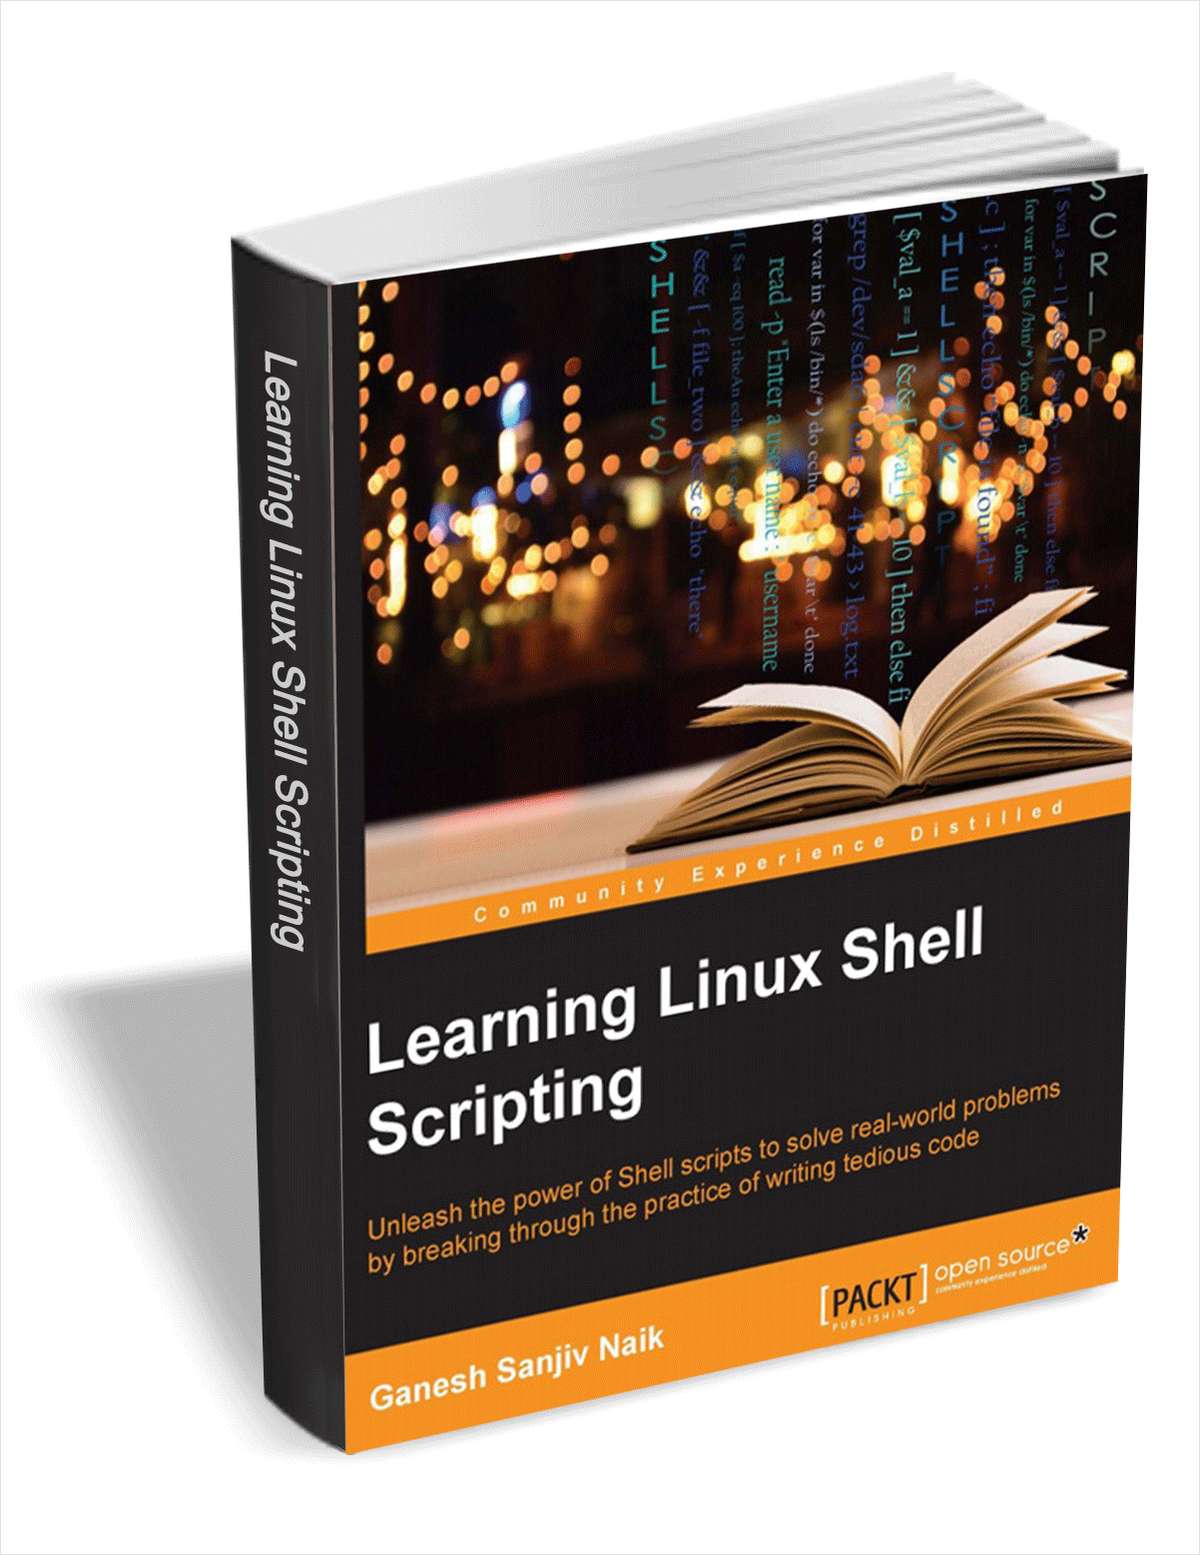 Mastering linux. Linux книга. Обучение Linux. Linux Shell. Эффективное Linux книга.